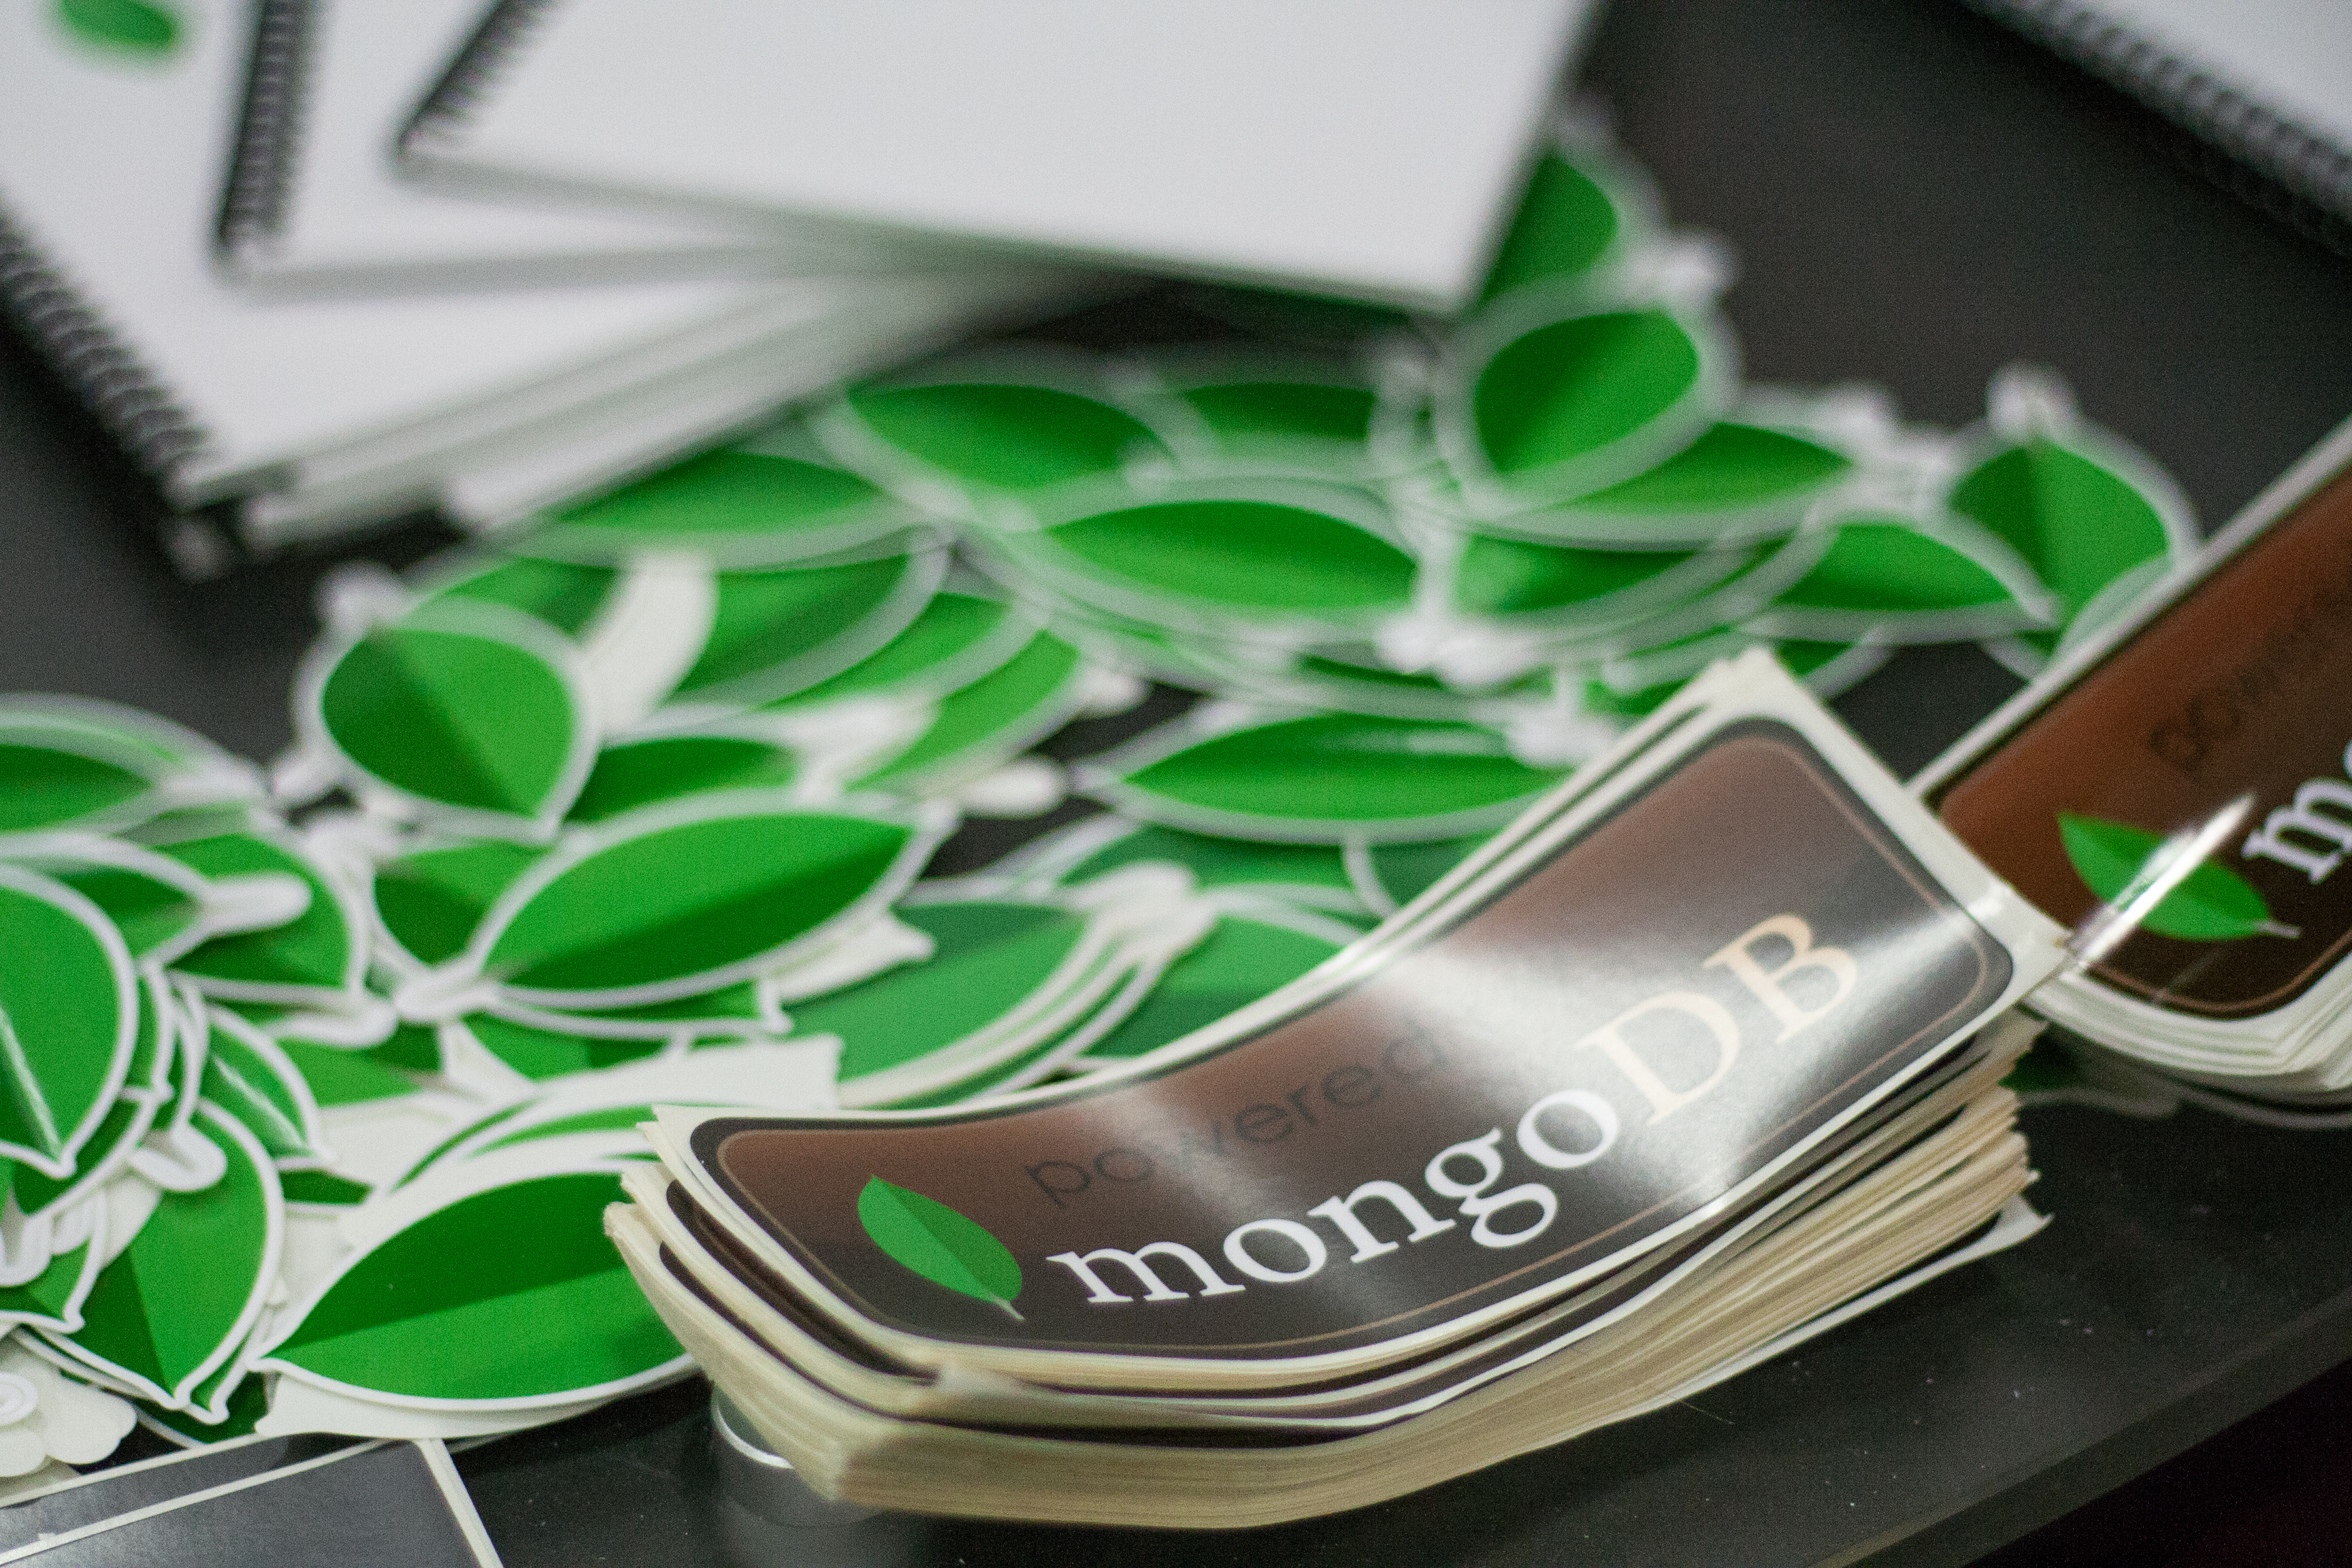 Database provider MongoDB has filed to go public